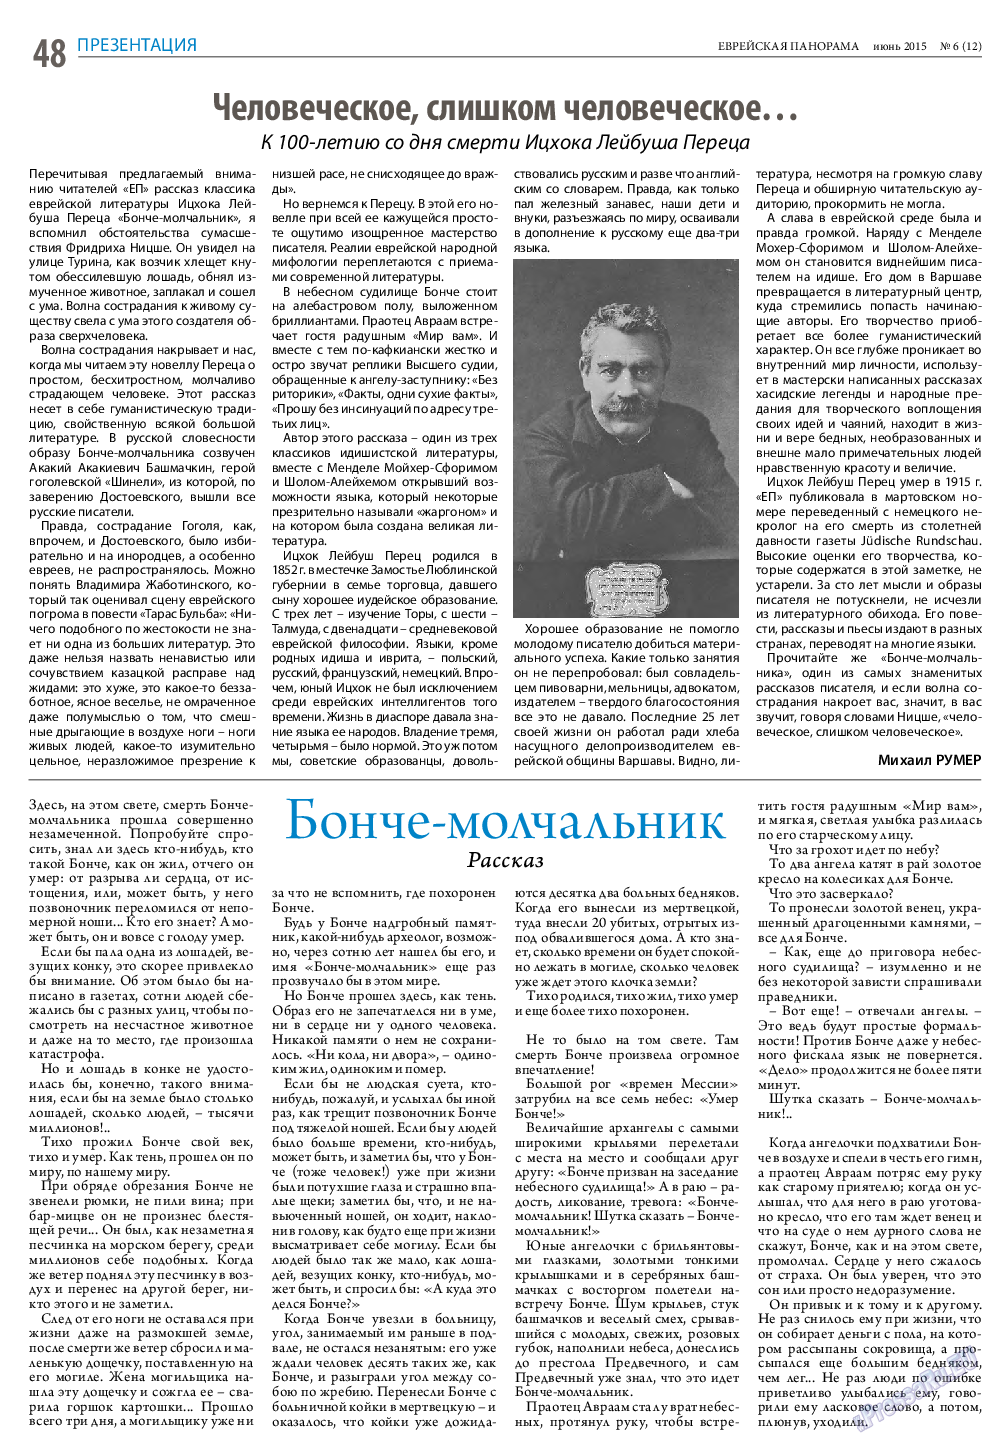 Еврейская панорама, газета. 2015 №6 стр.48